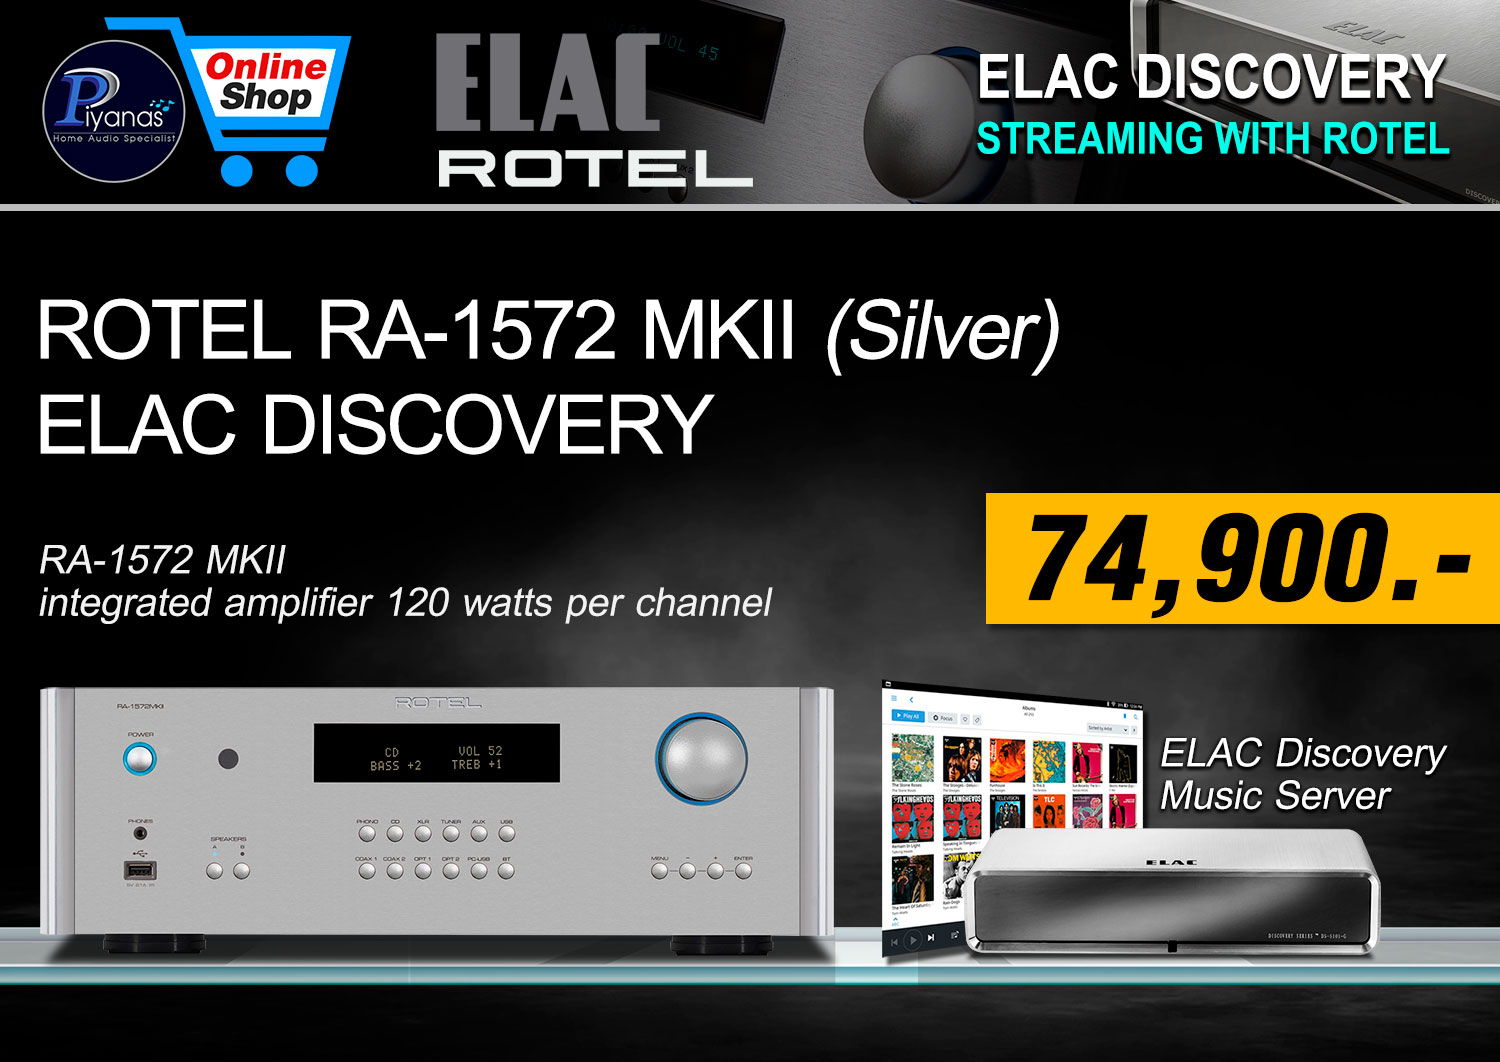 RA-1572 MKII (Silver)+
Elac Discovery